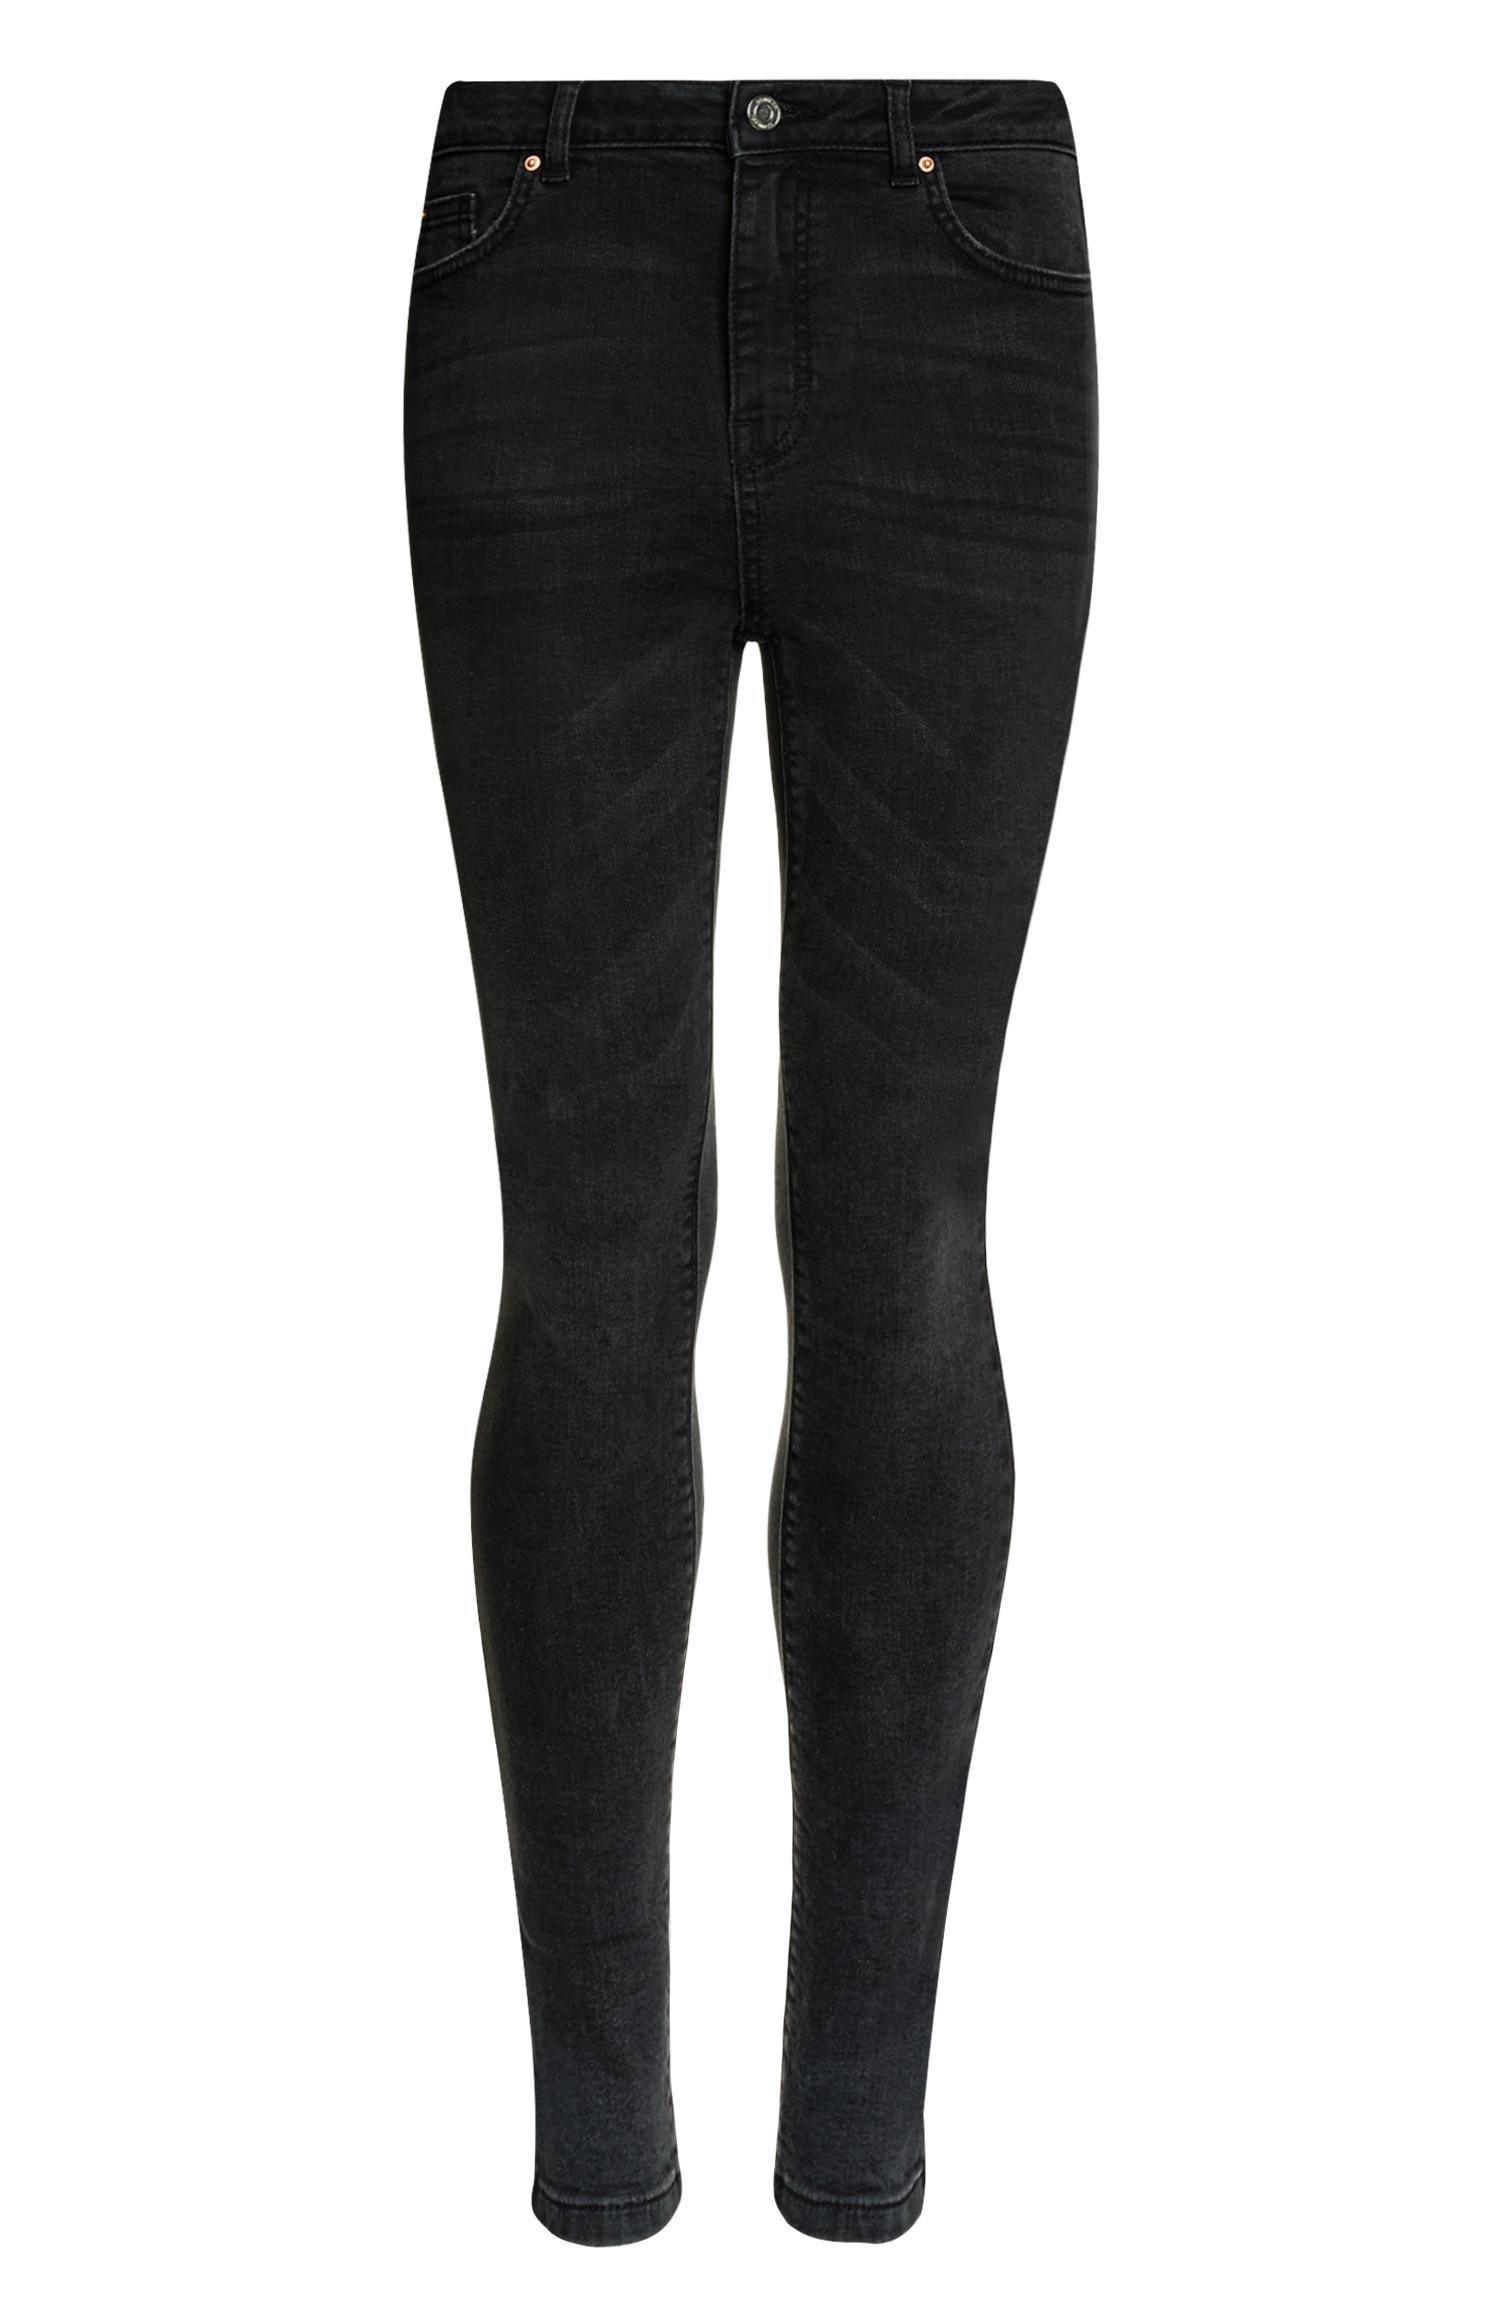 primark black high waisted jeans